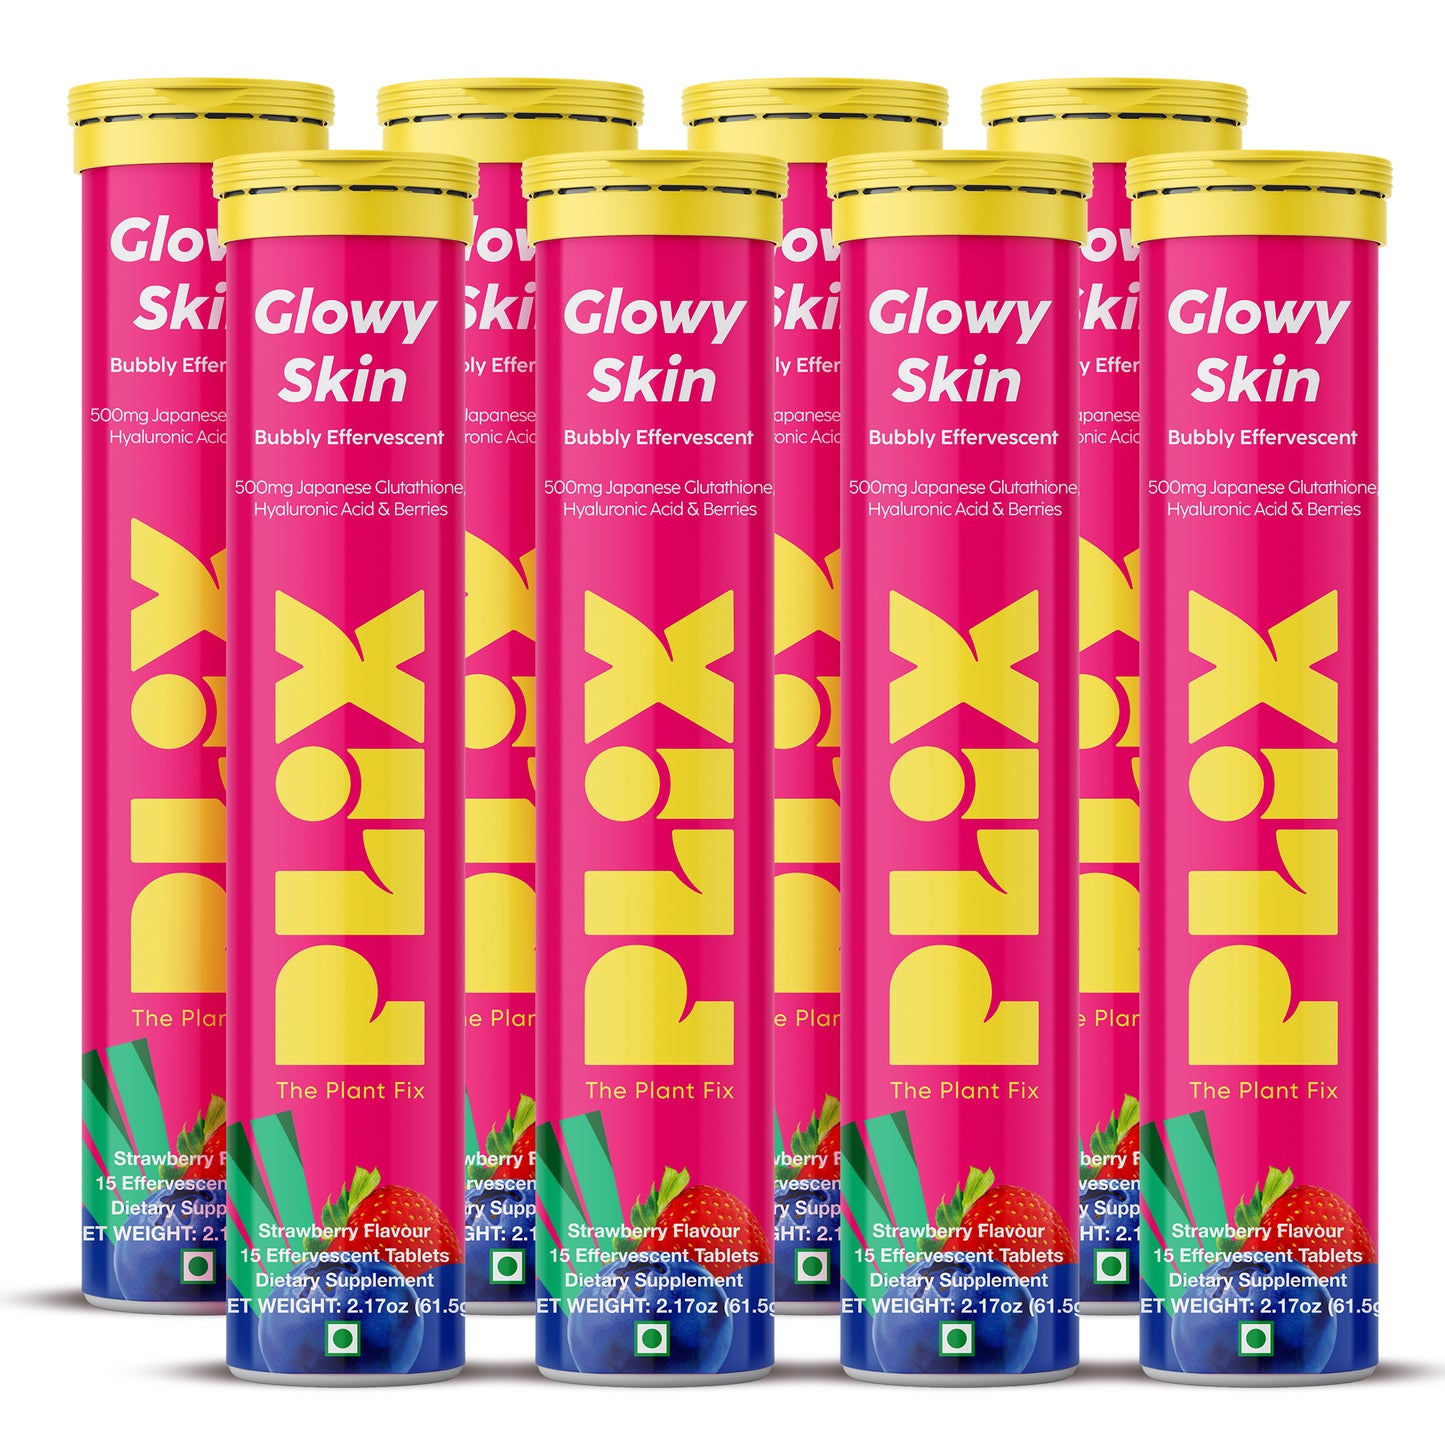 Glowy Skin Effervescent with 500mg Glutathione